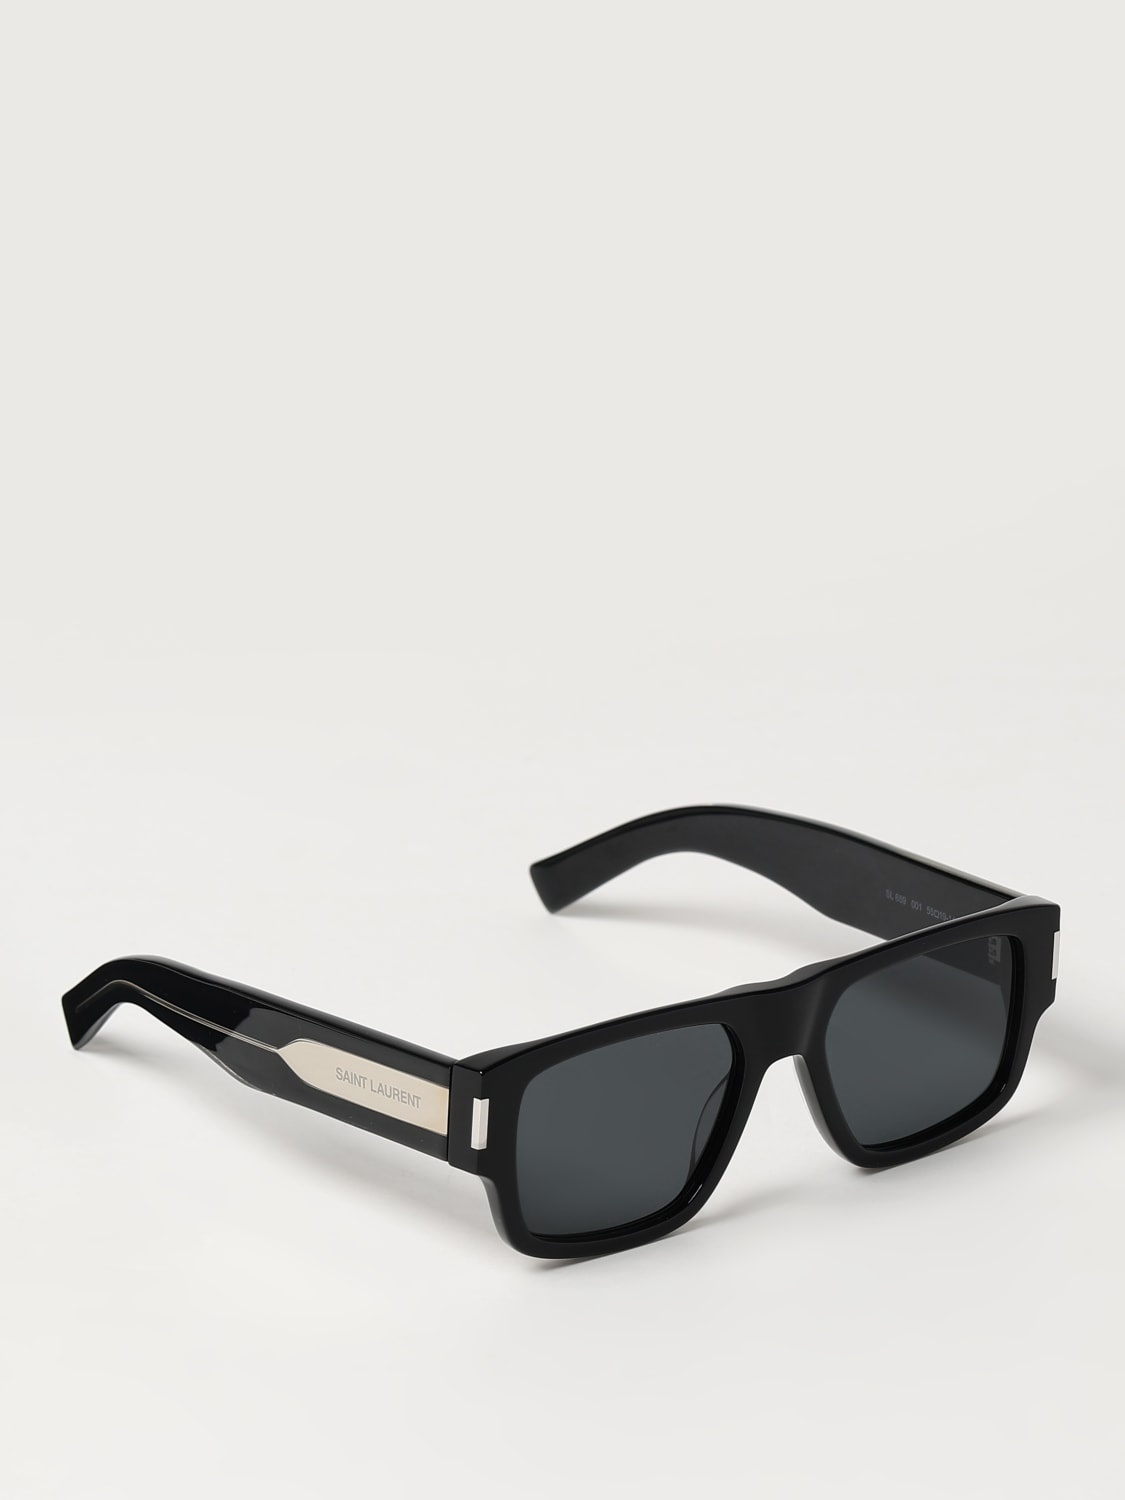 Sunglasses men Saint Laurent - 1